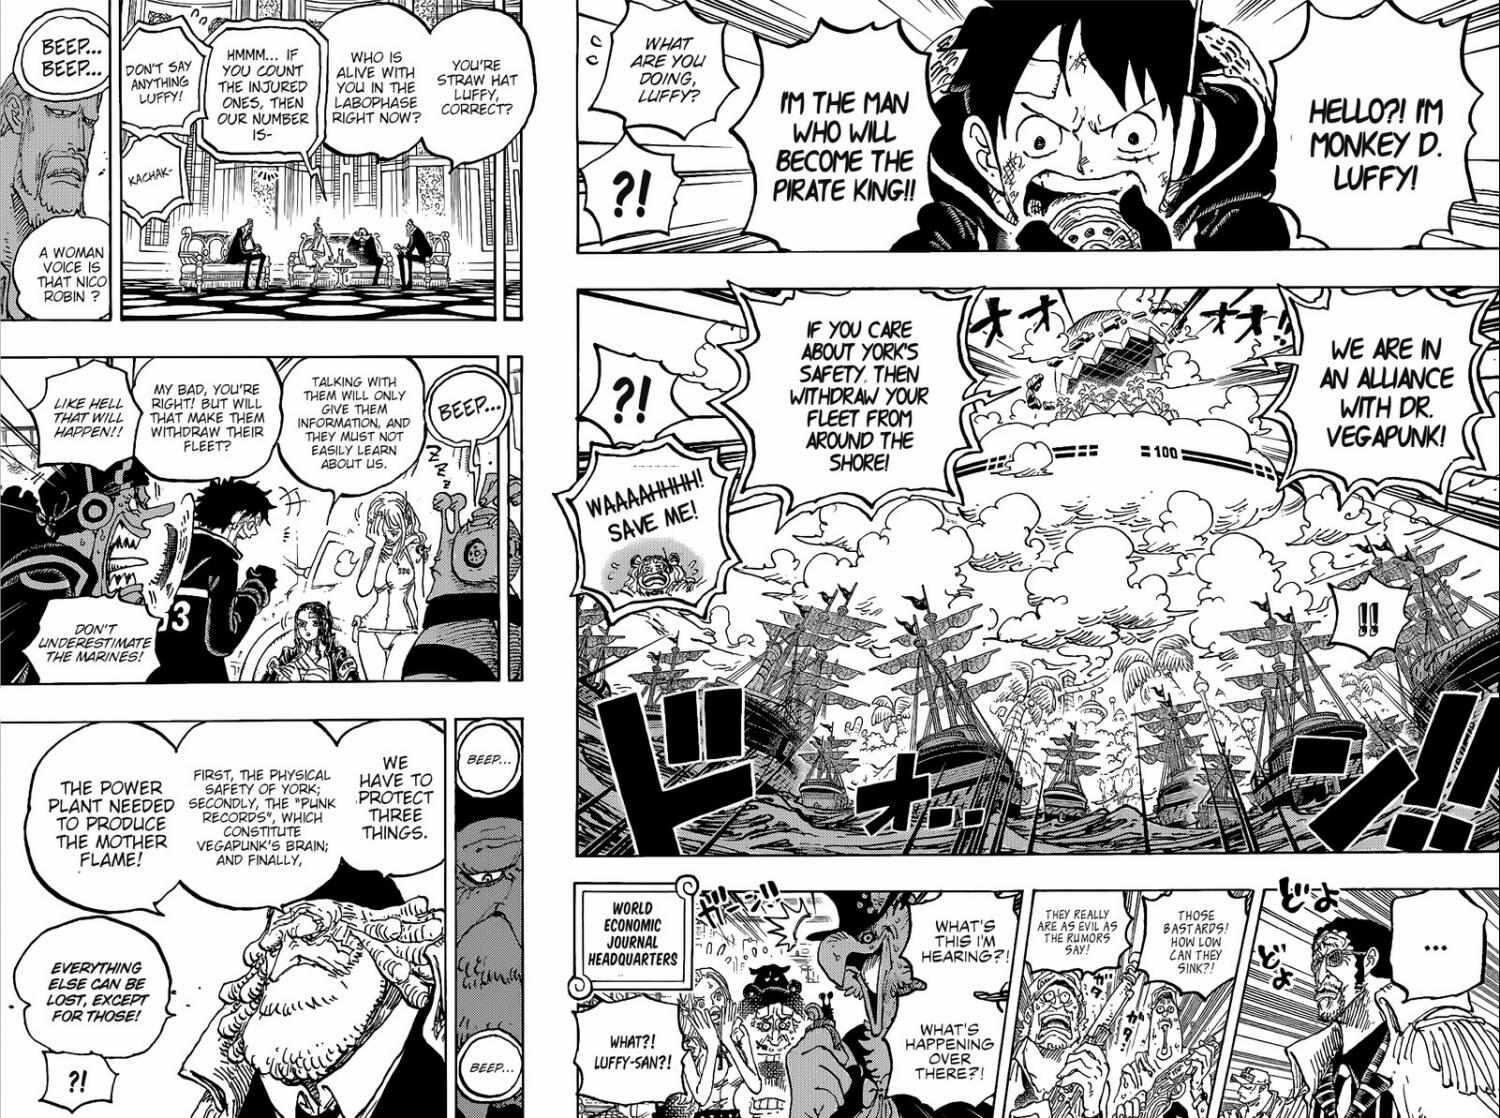 Robin Saves Sanji!  One Piece Episode 1020 REACTION 